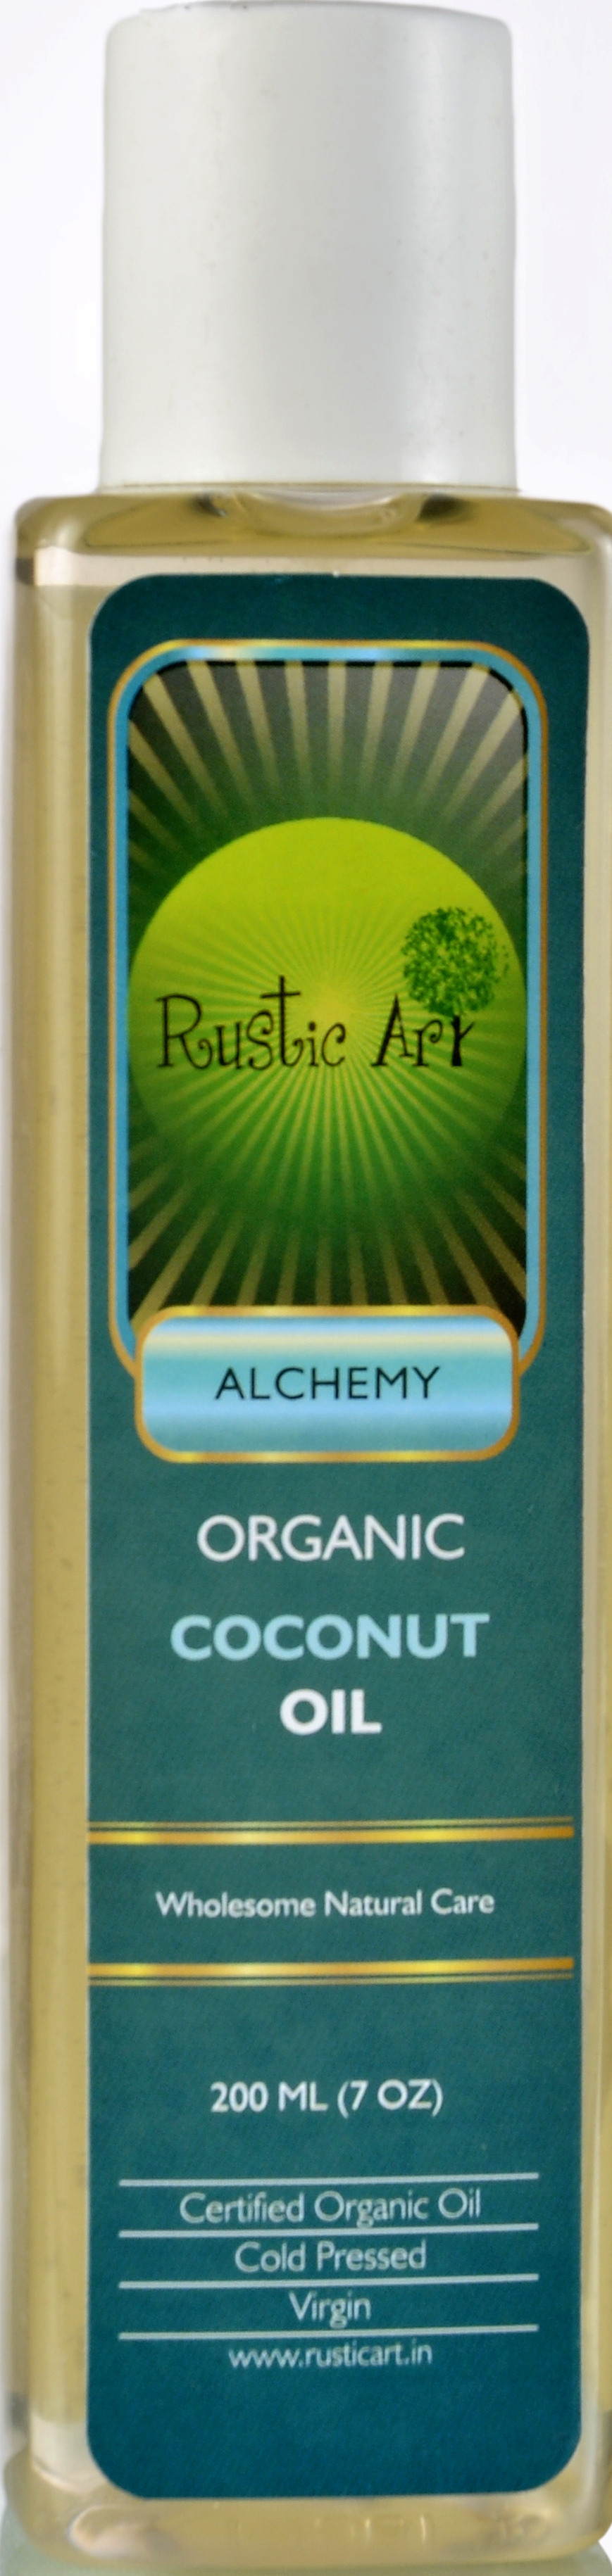 Buy Rustic Art Organic Coconut Oil at Best Price Online